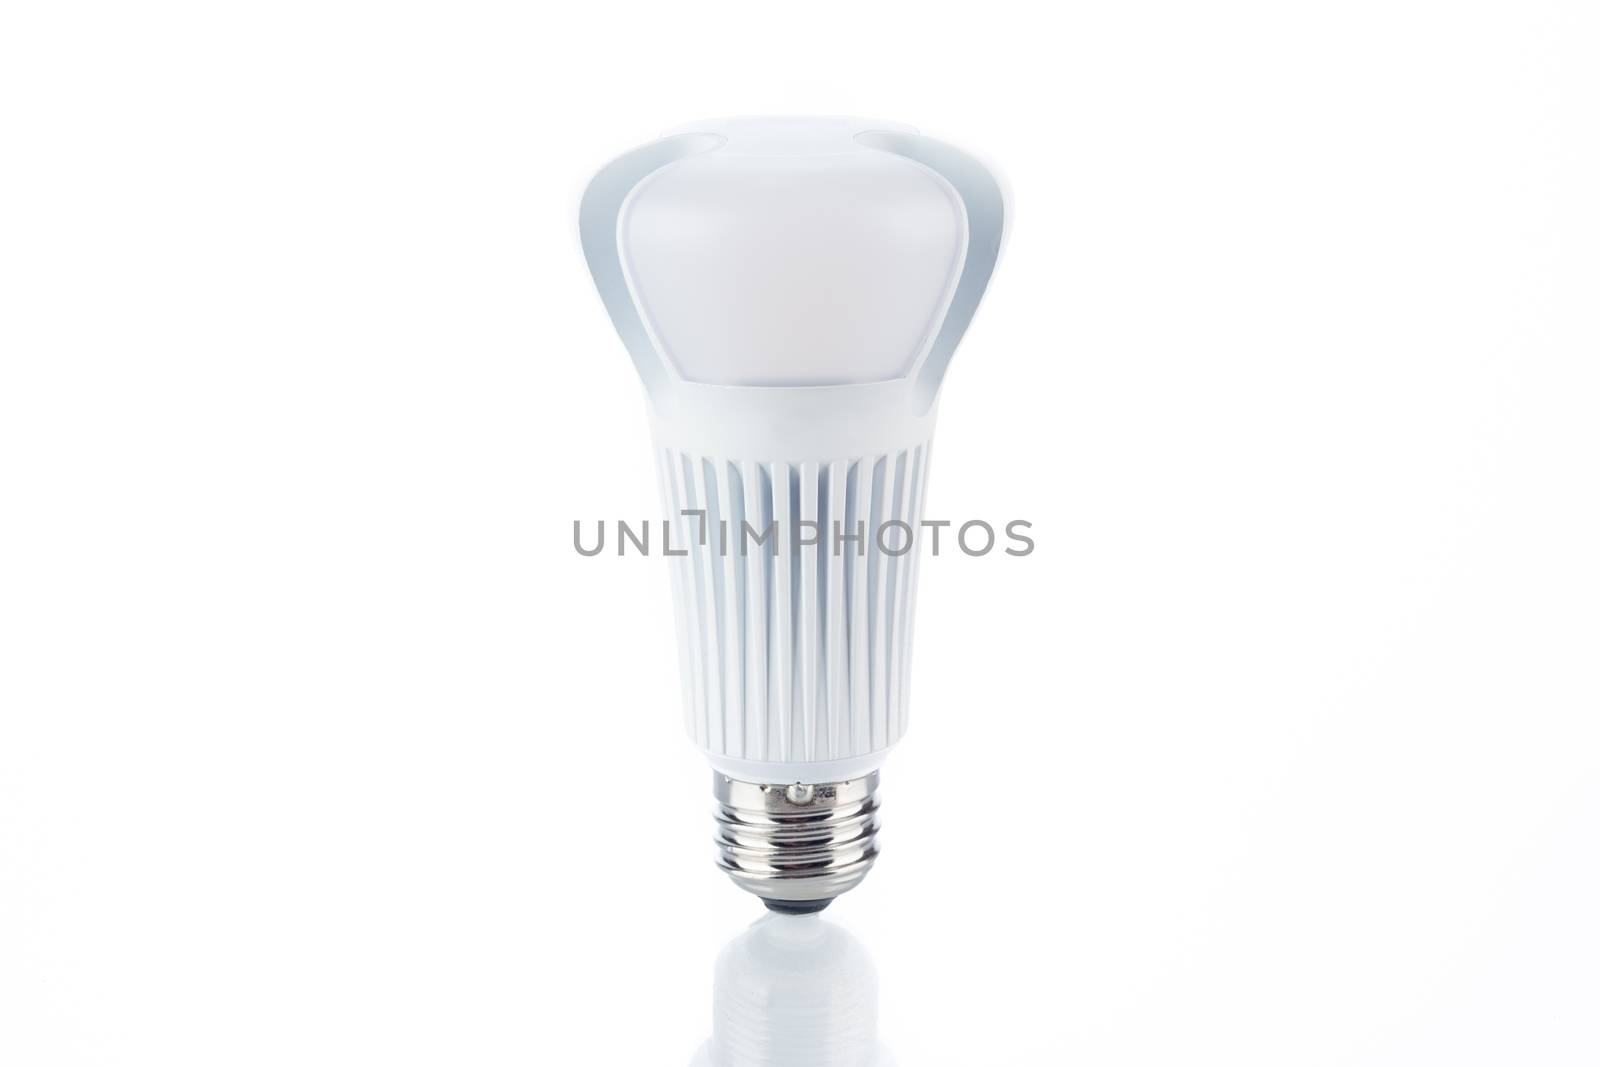 LED Lightbulb by rockinelle